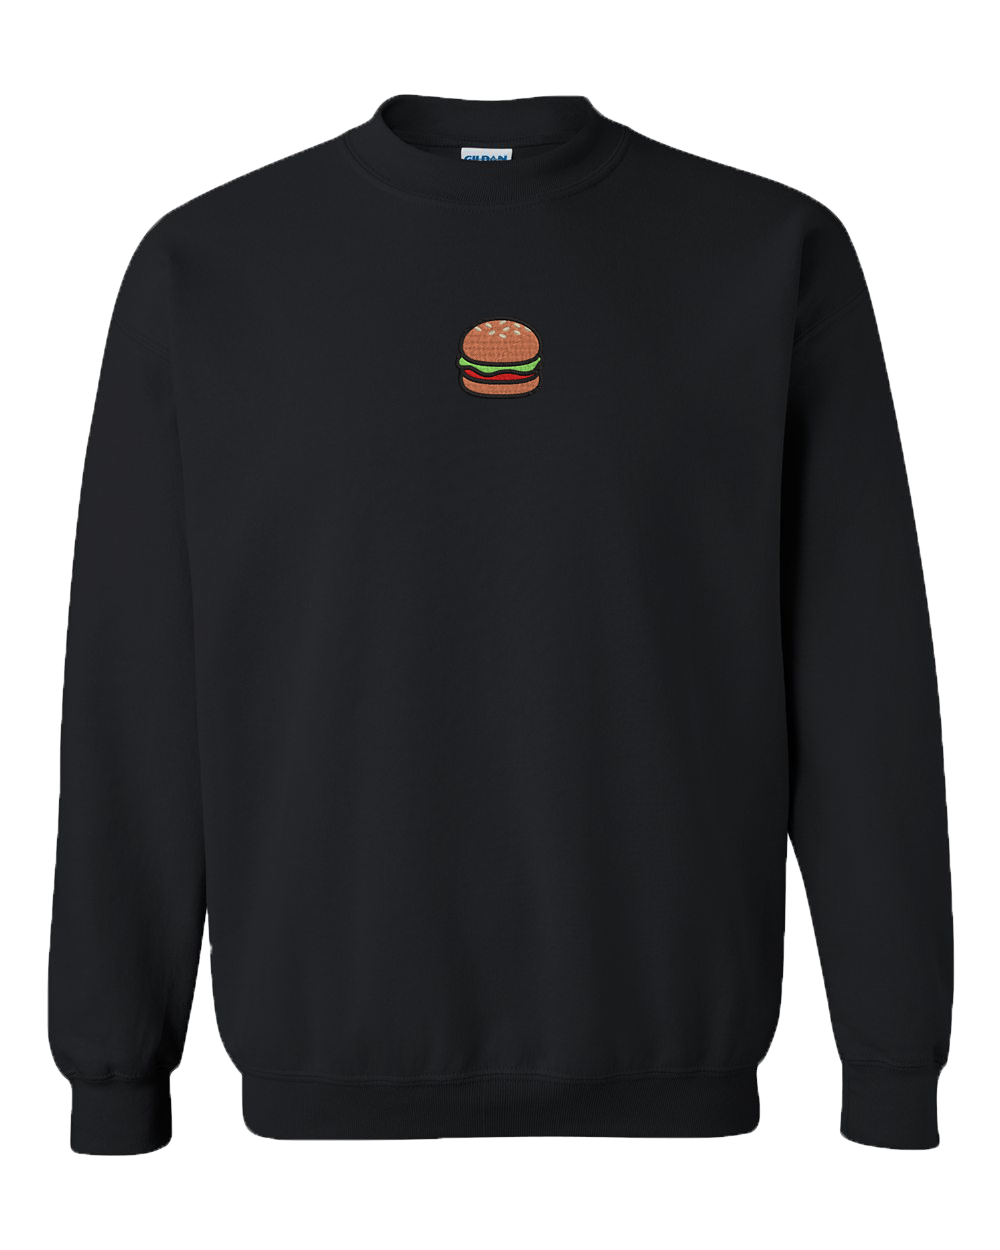 Embroidered Burger Sweatshirt